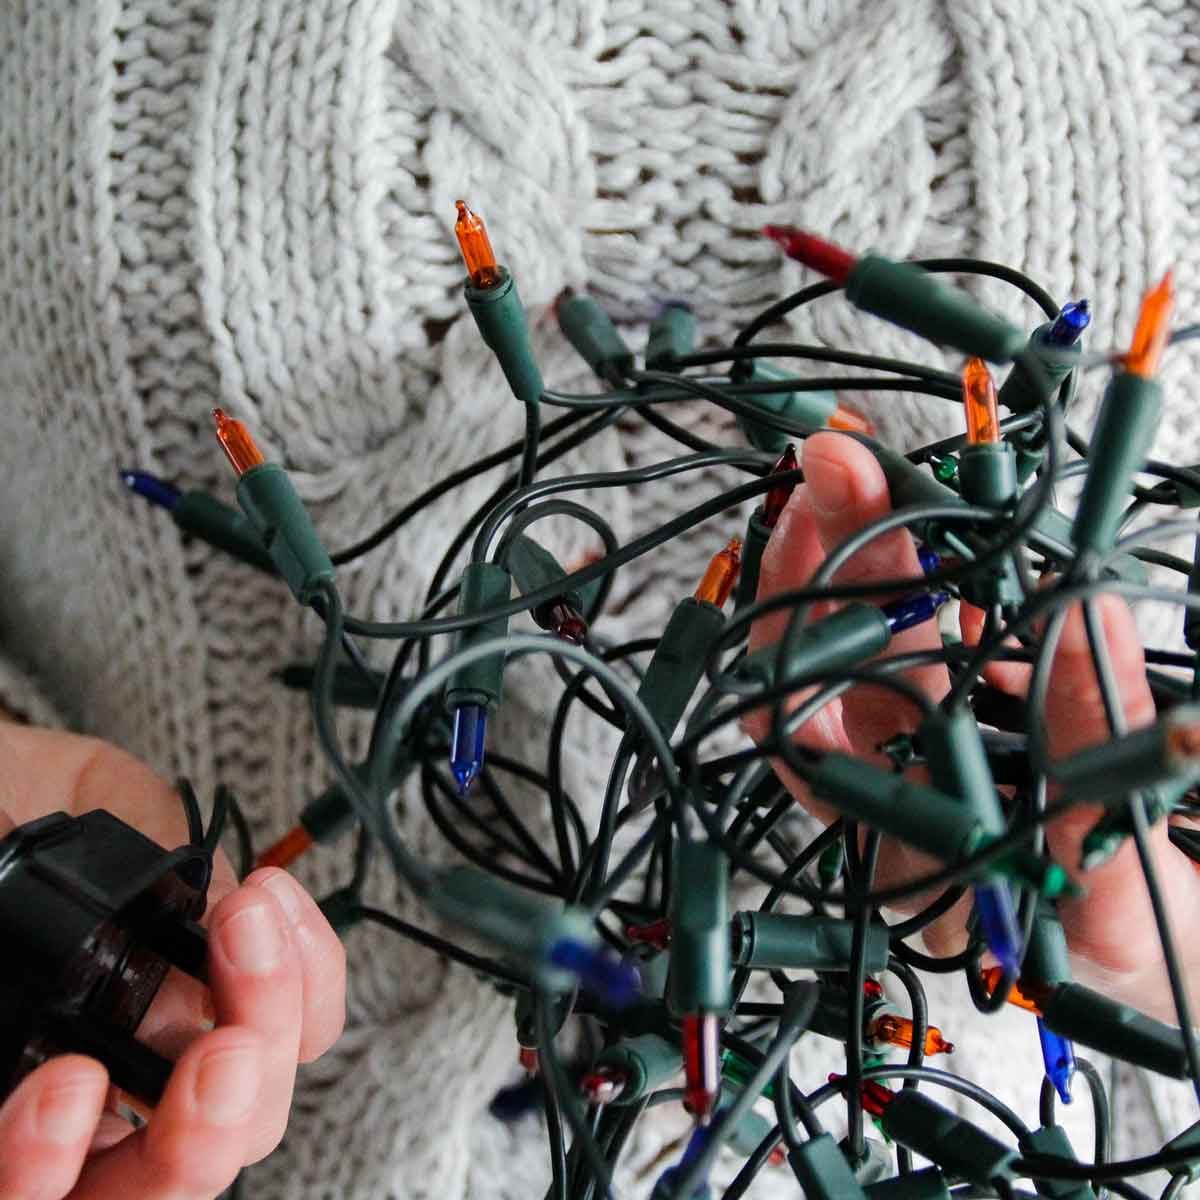 How to Test, Fix and Christmas (DIY) | Handyman